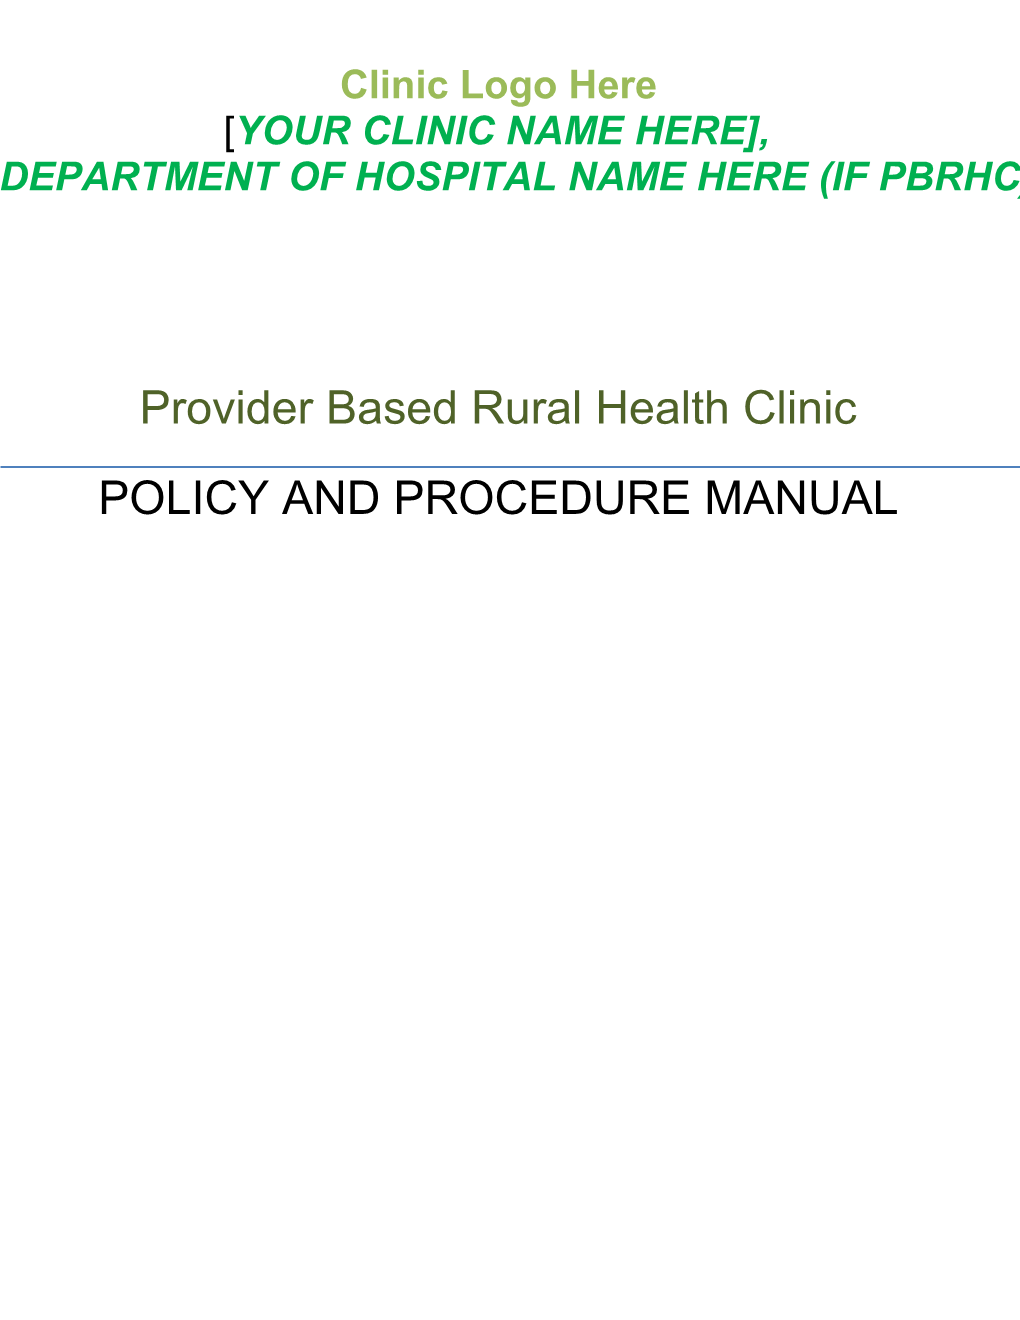 Provider Based Rural Health Clinic